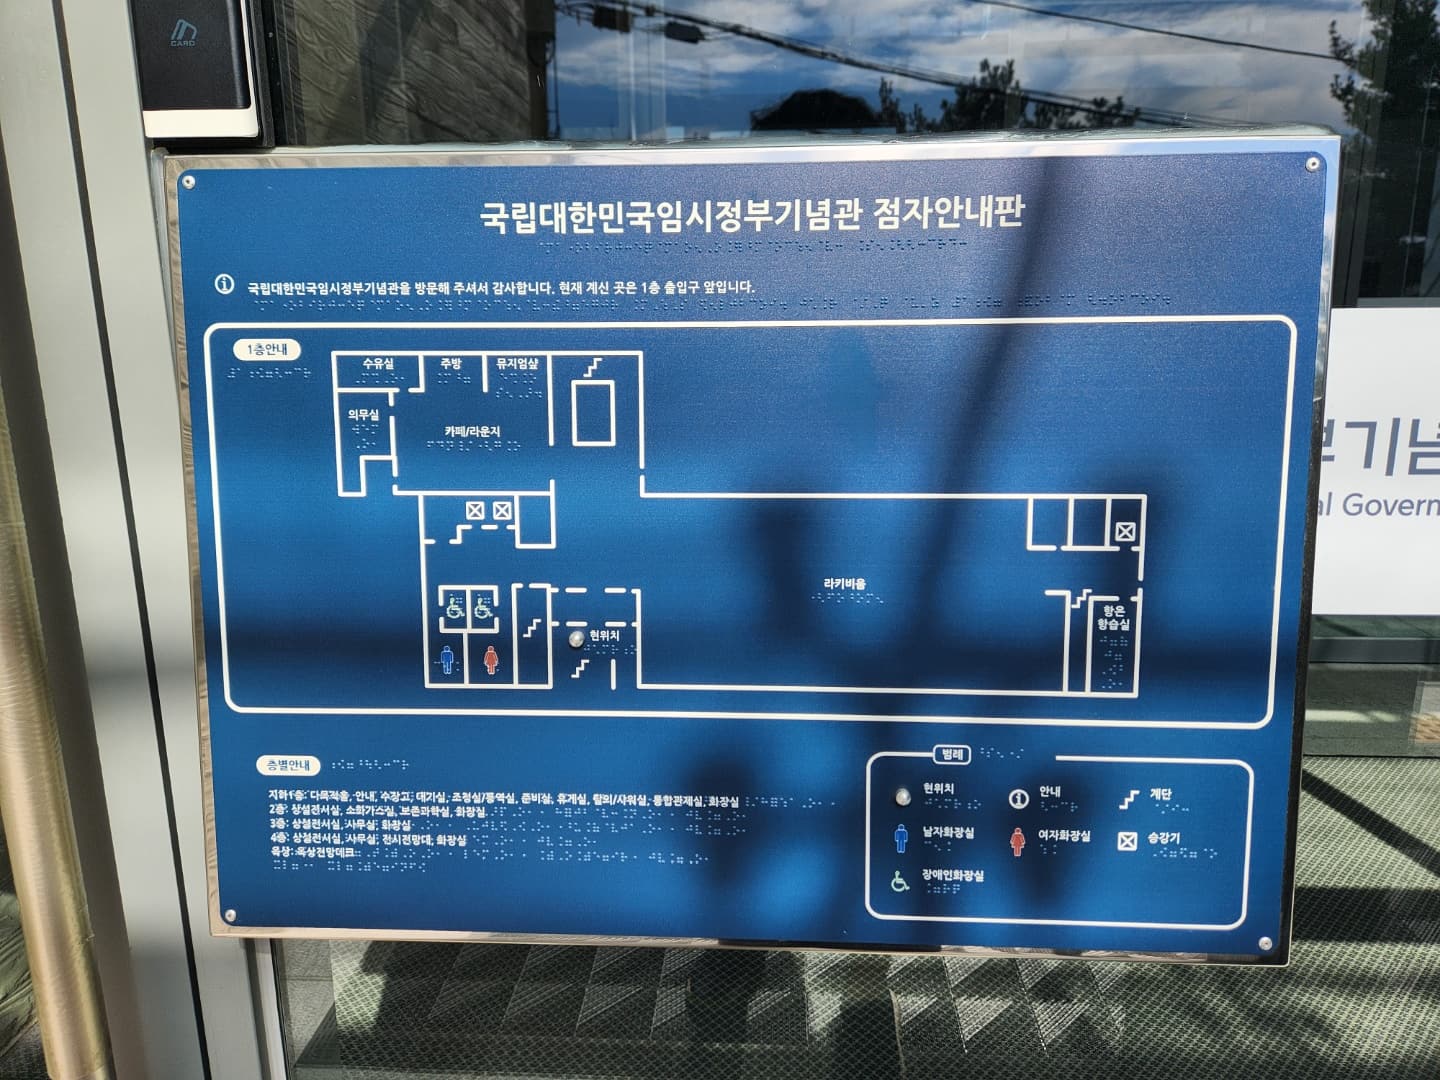 Information desk/ Information board0 : Korean tactile braille map board on the glass door